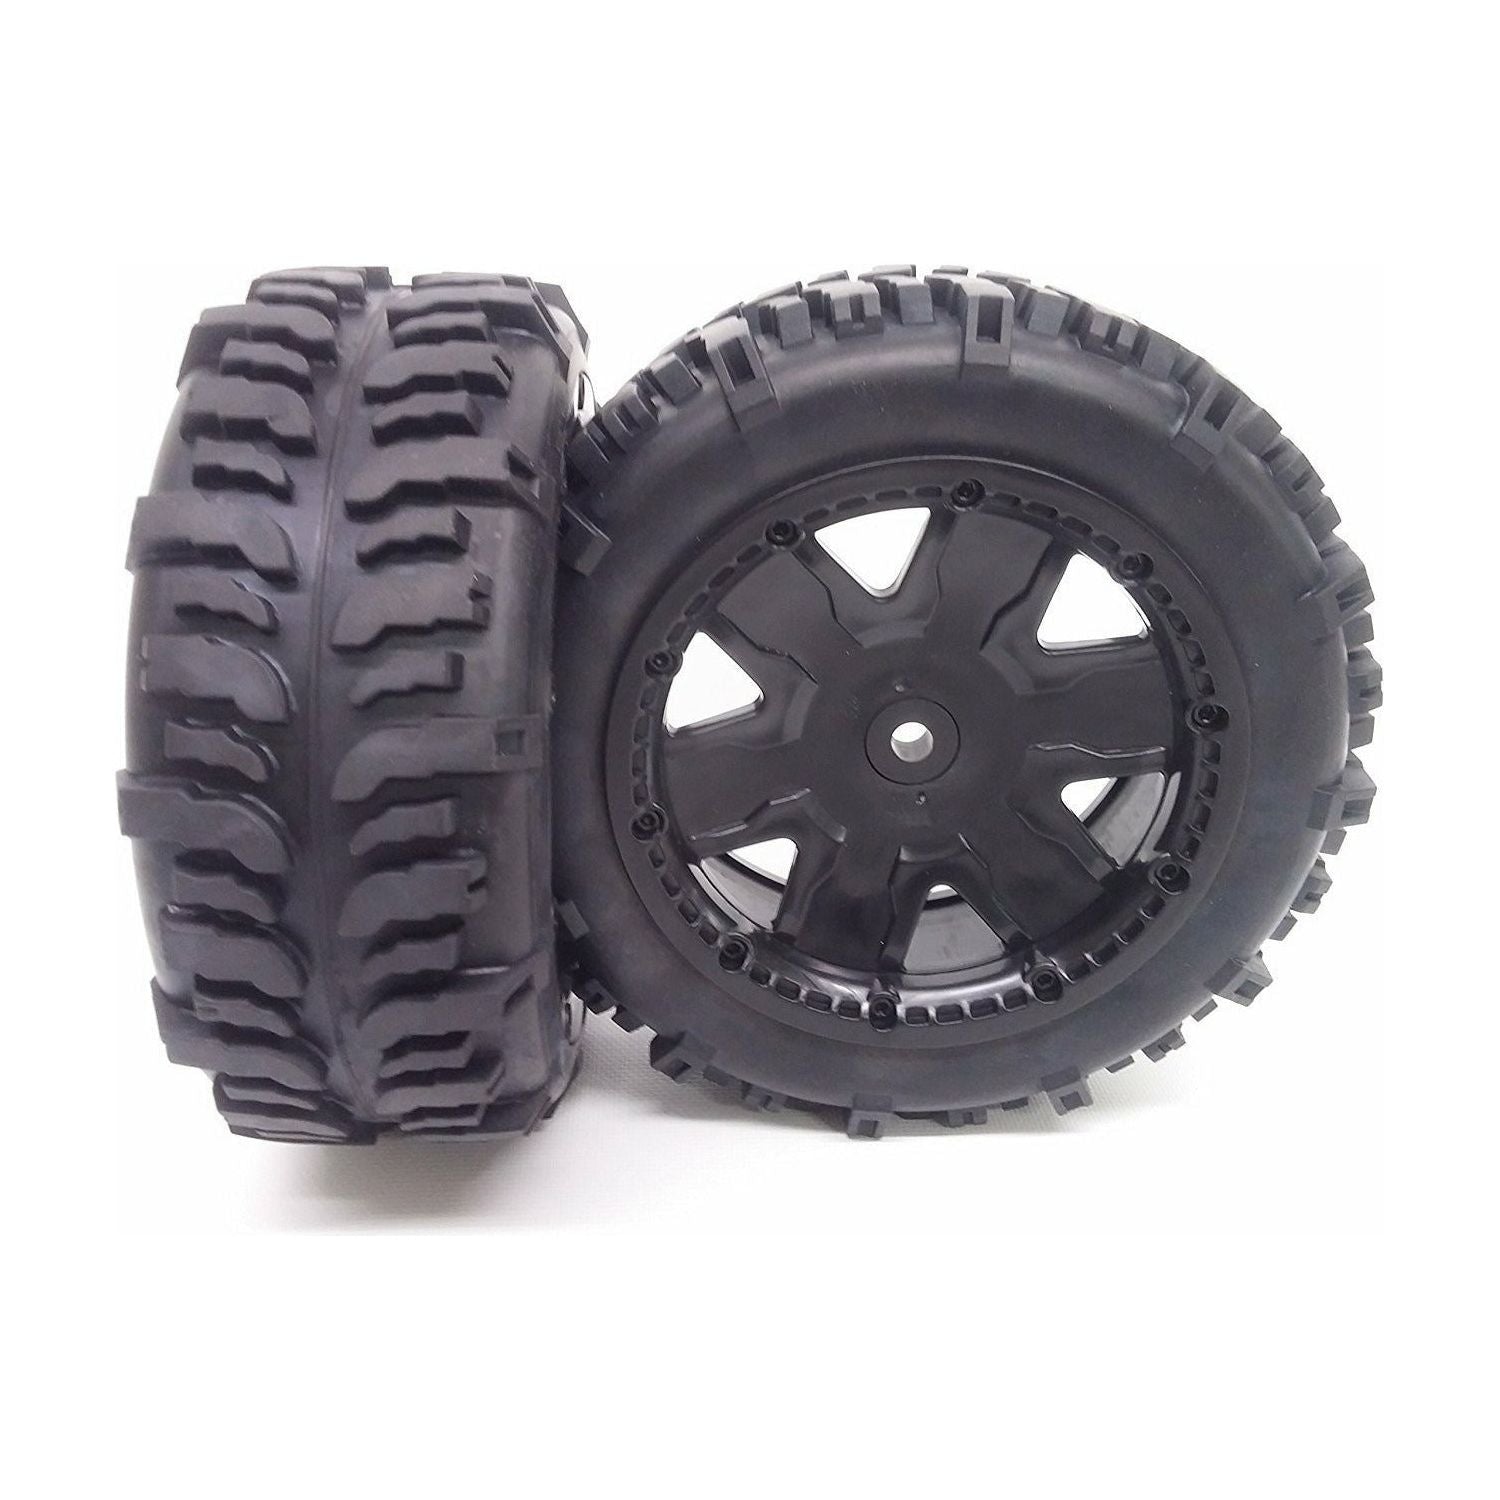 Swamp Dawg Tires & Yuma Rims with Beadlocks - Front (1 Pair) (Choose Color)